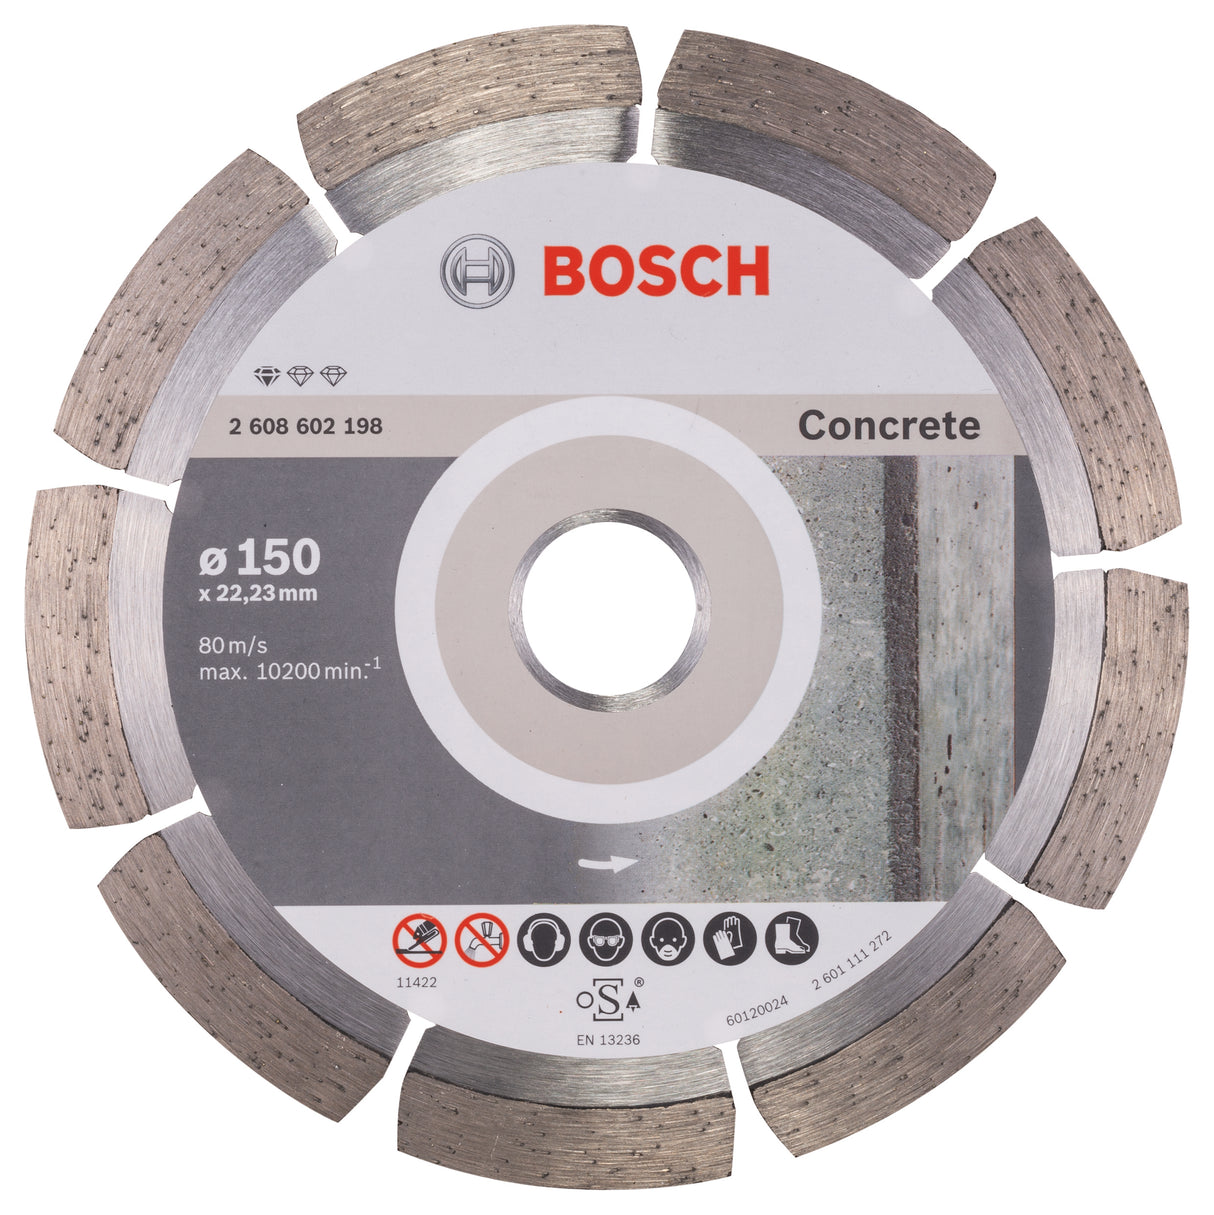 Bosch Professional Diamond Cutting Disc for Concrete - 150 x 22.23 x 2 x 10 mm